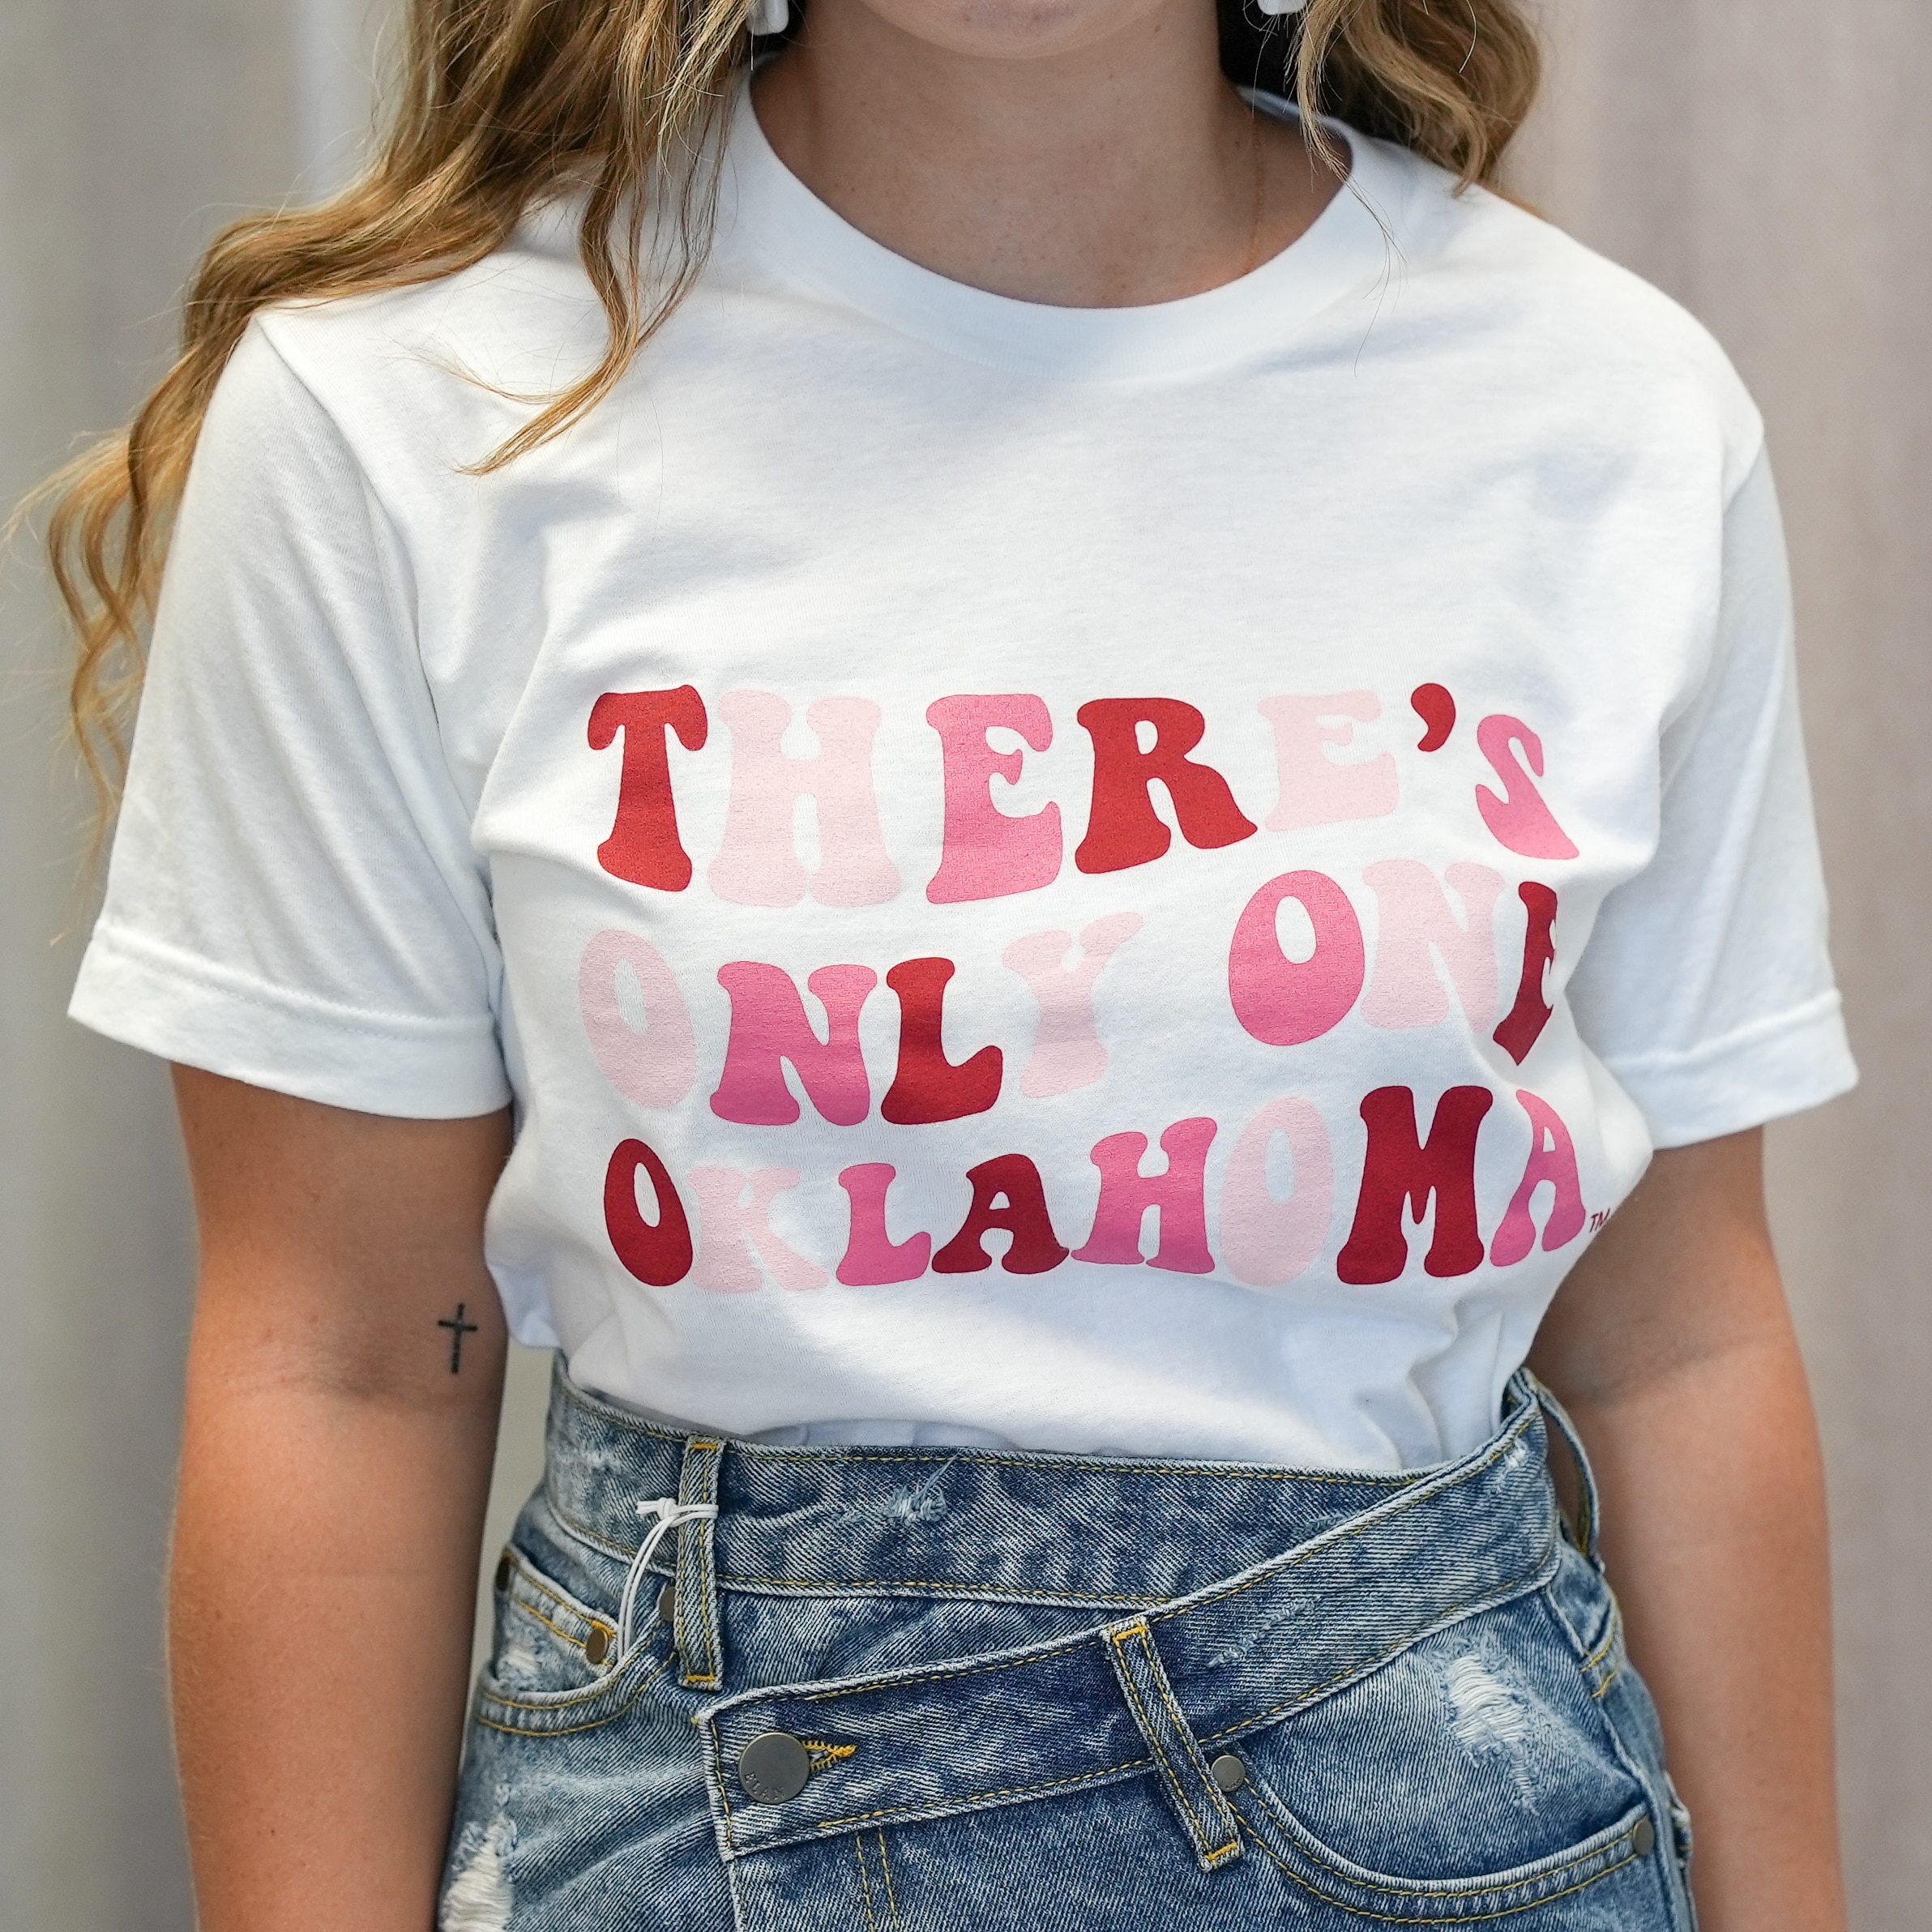 University of Oklahoma Groovy T-shirt image